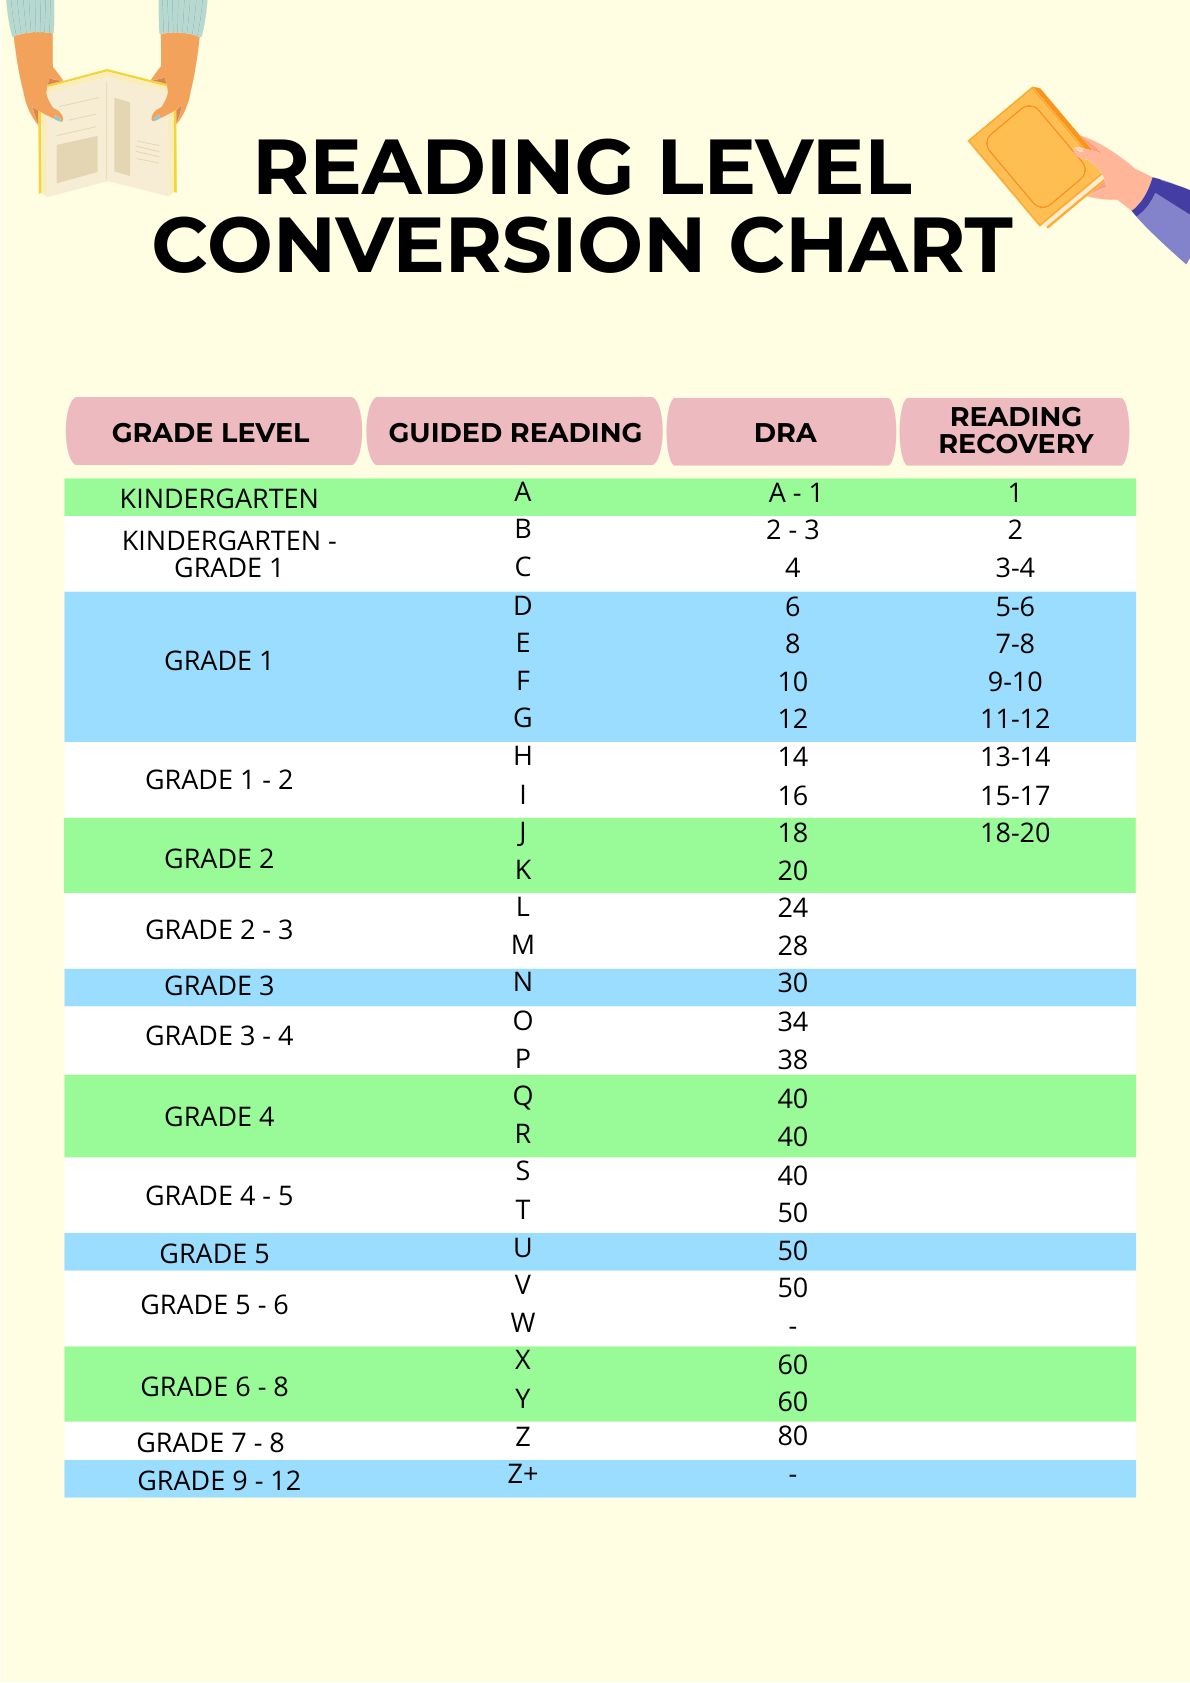 Reading Progress Chart in Illustrator, PDF Download